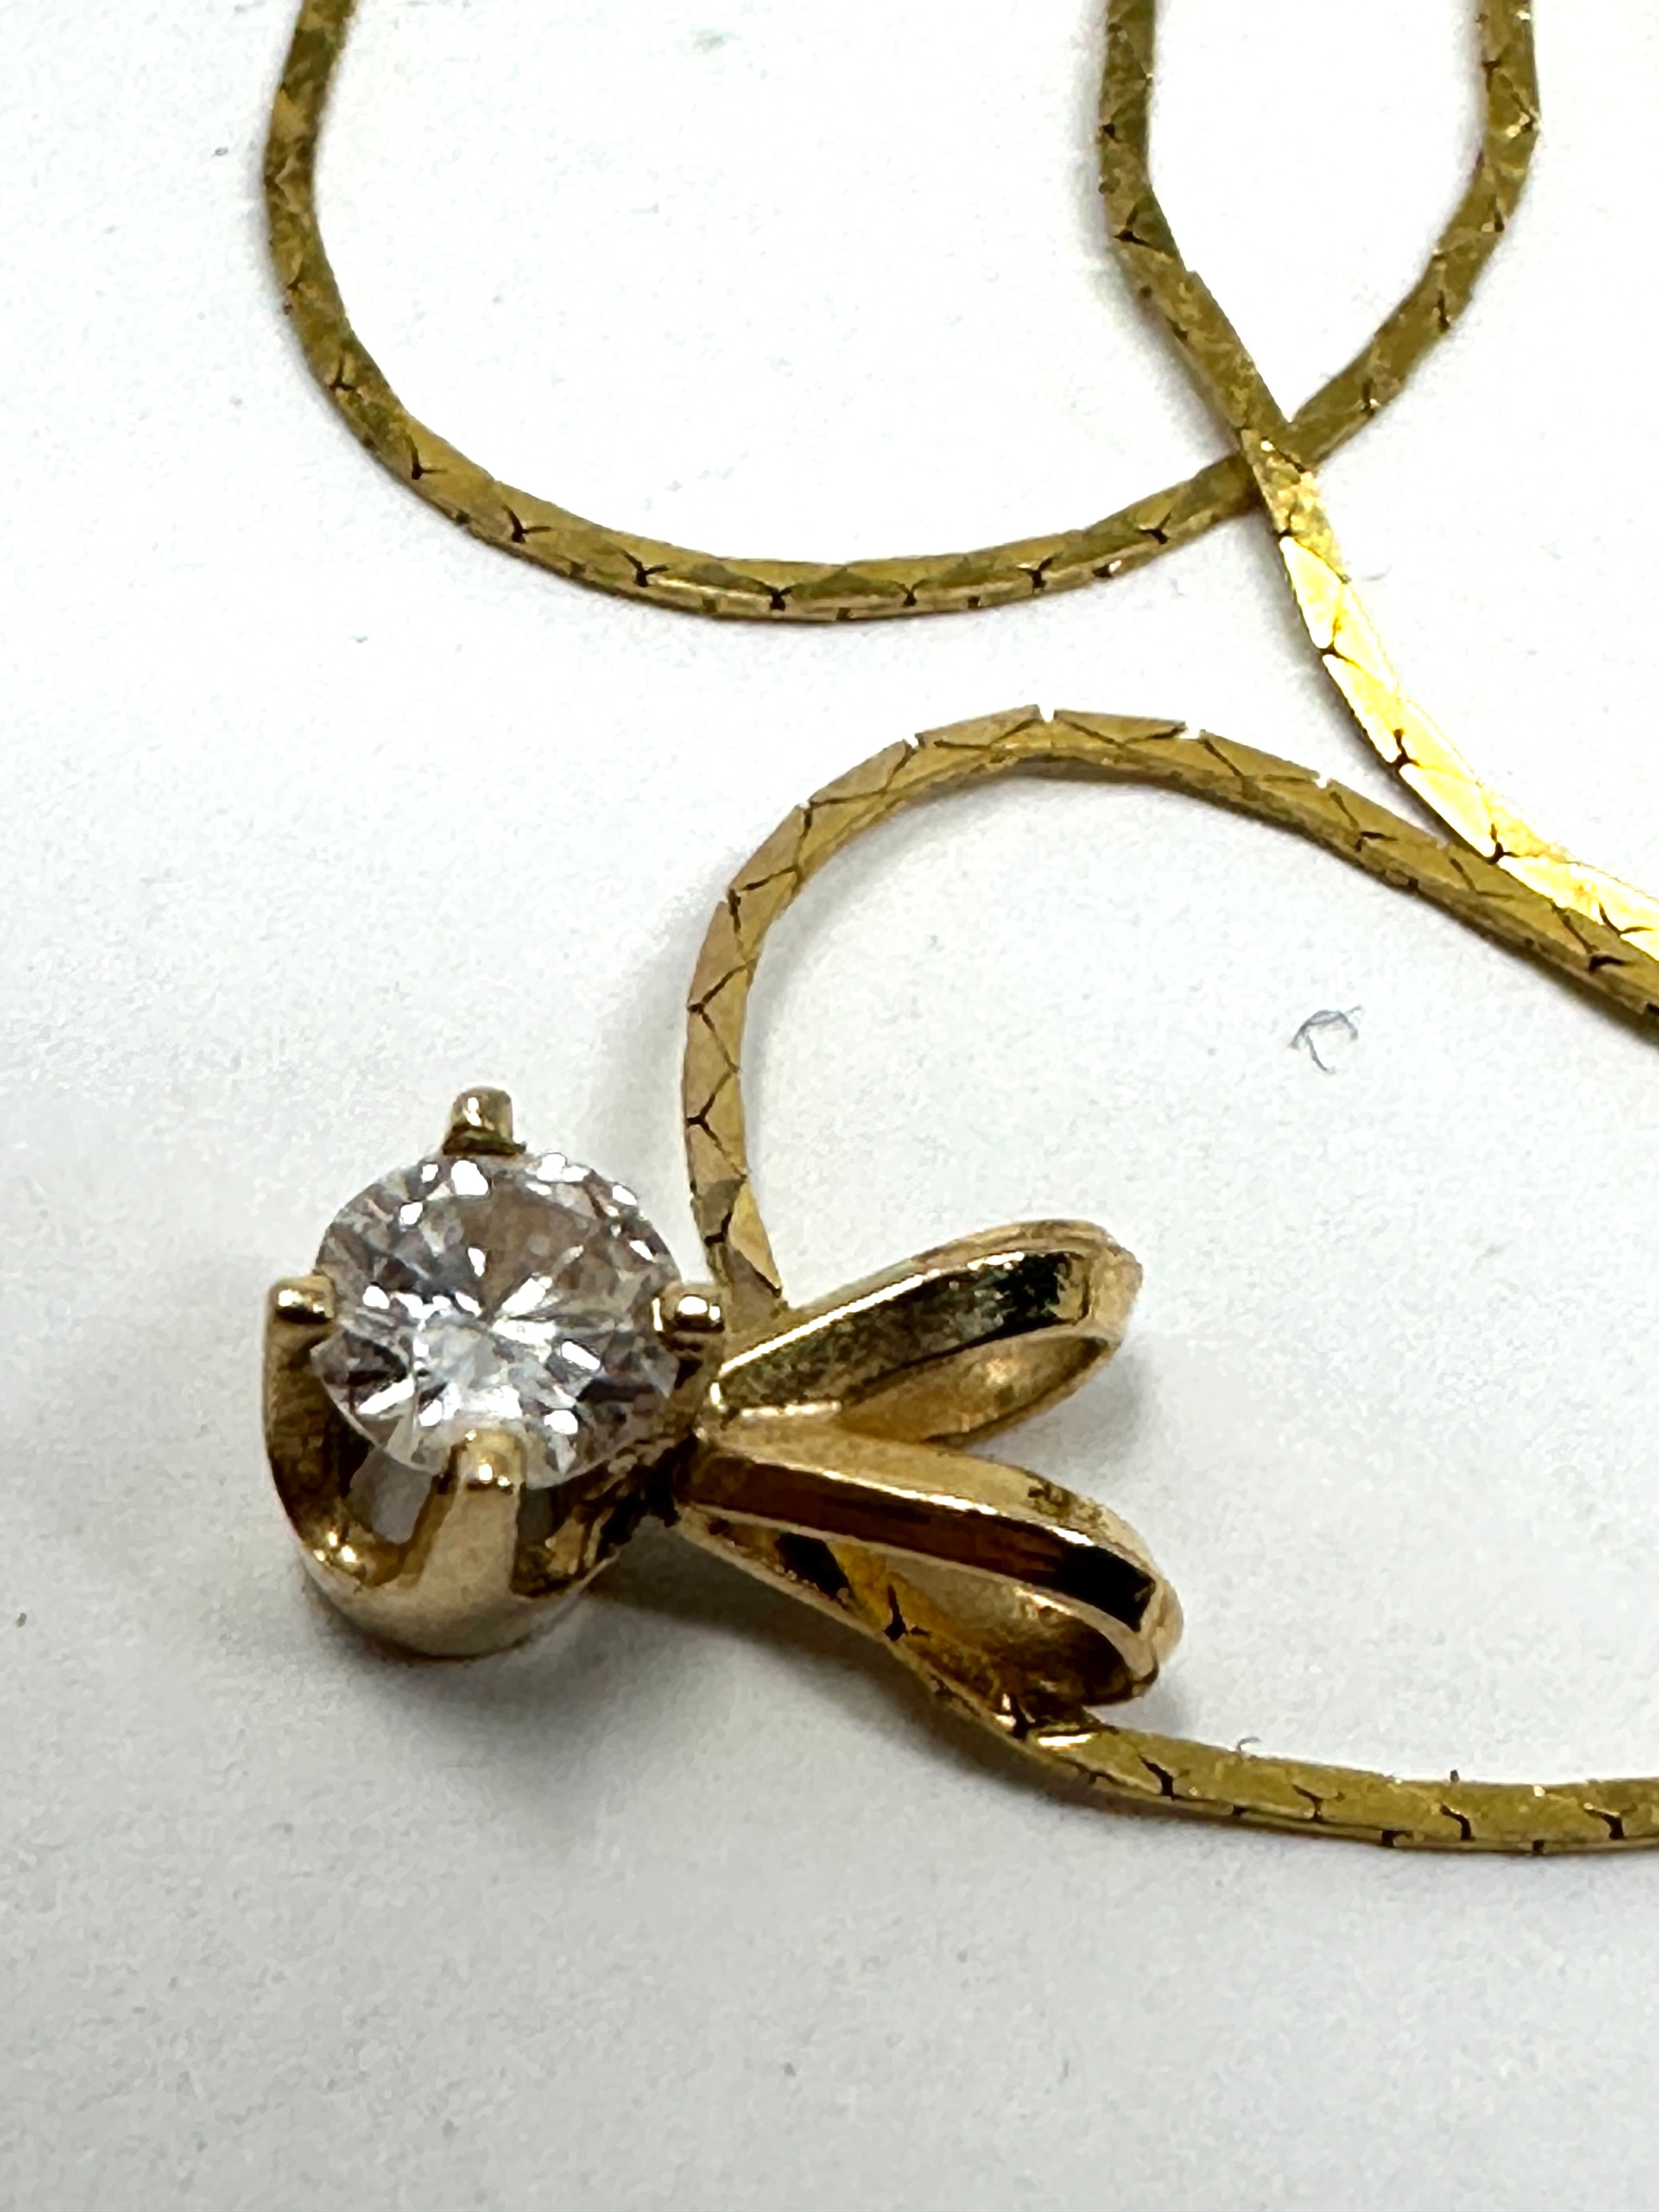 14ct gold diamond pendant necklace 0.20 ct diamond weight 1.80g - Image 3 of 3